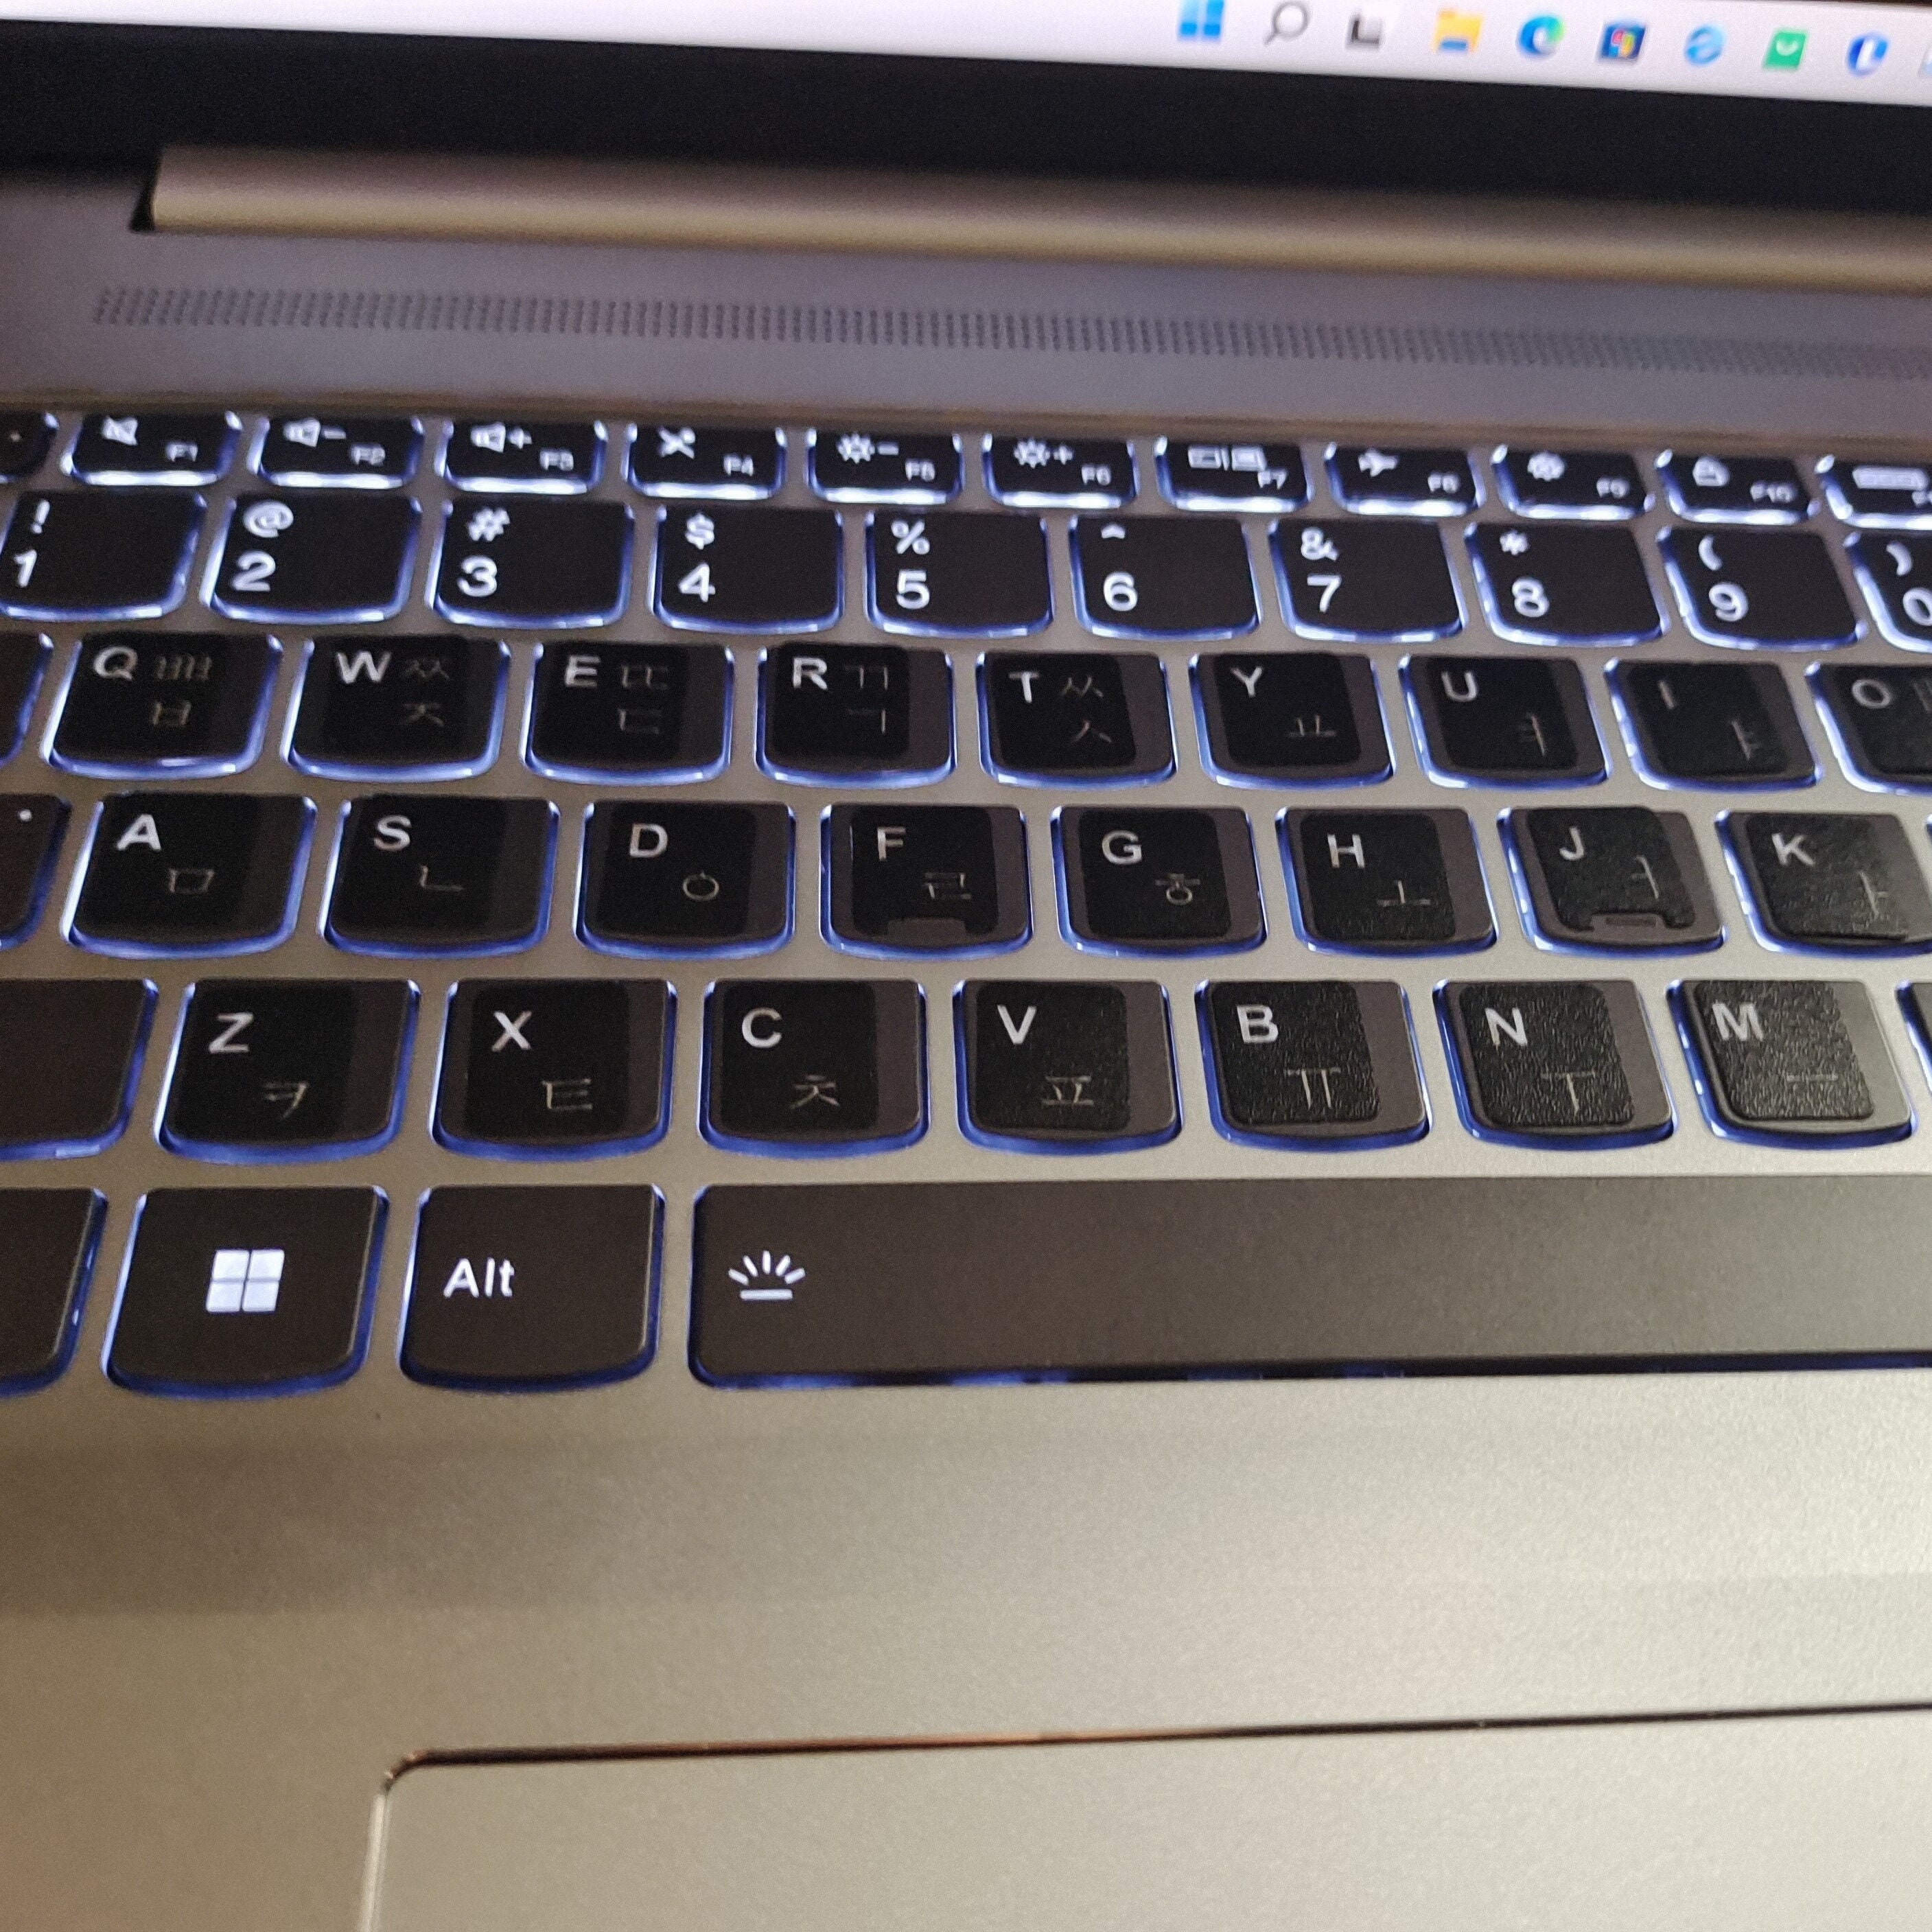 Korean-English Keyboard Stickers for PC Computer Laptop Notebook Desktop Keyboards,Blue Font,2Pack 